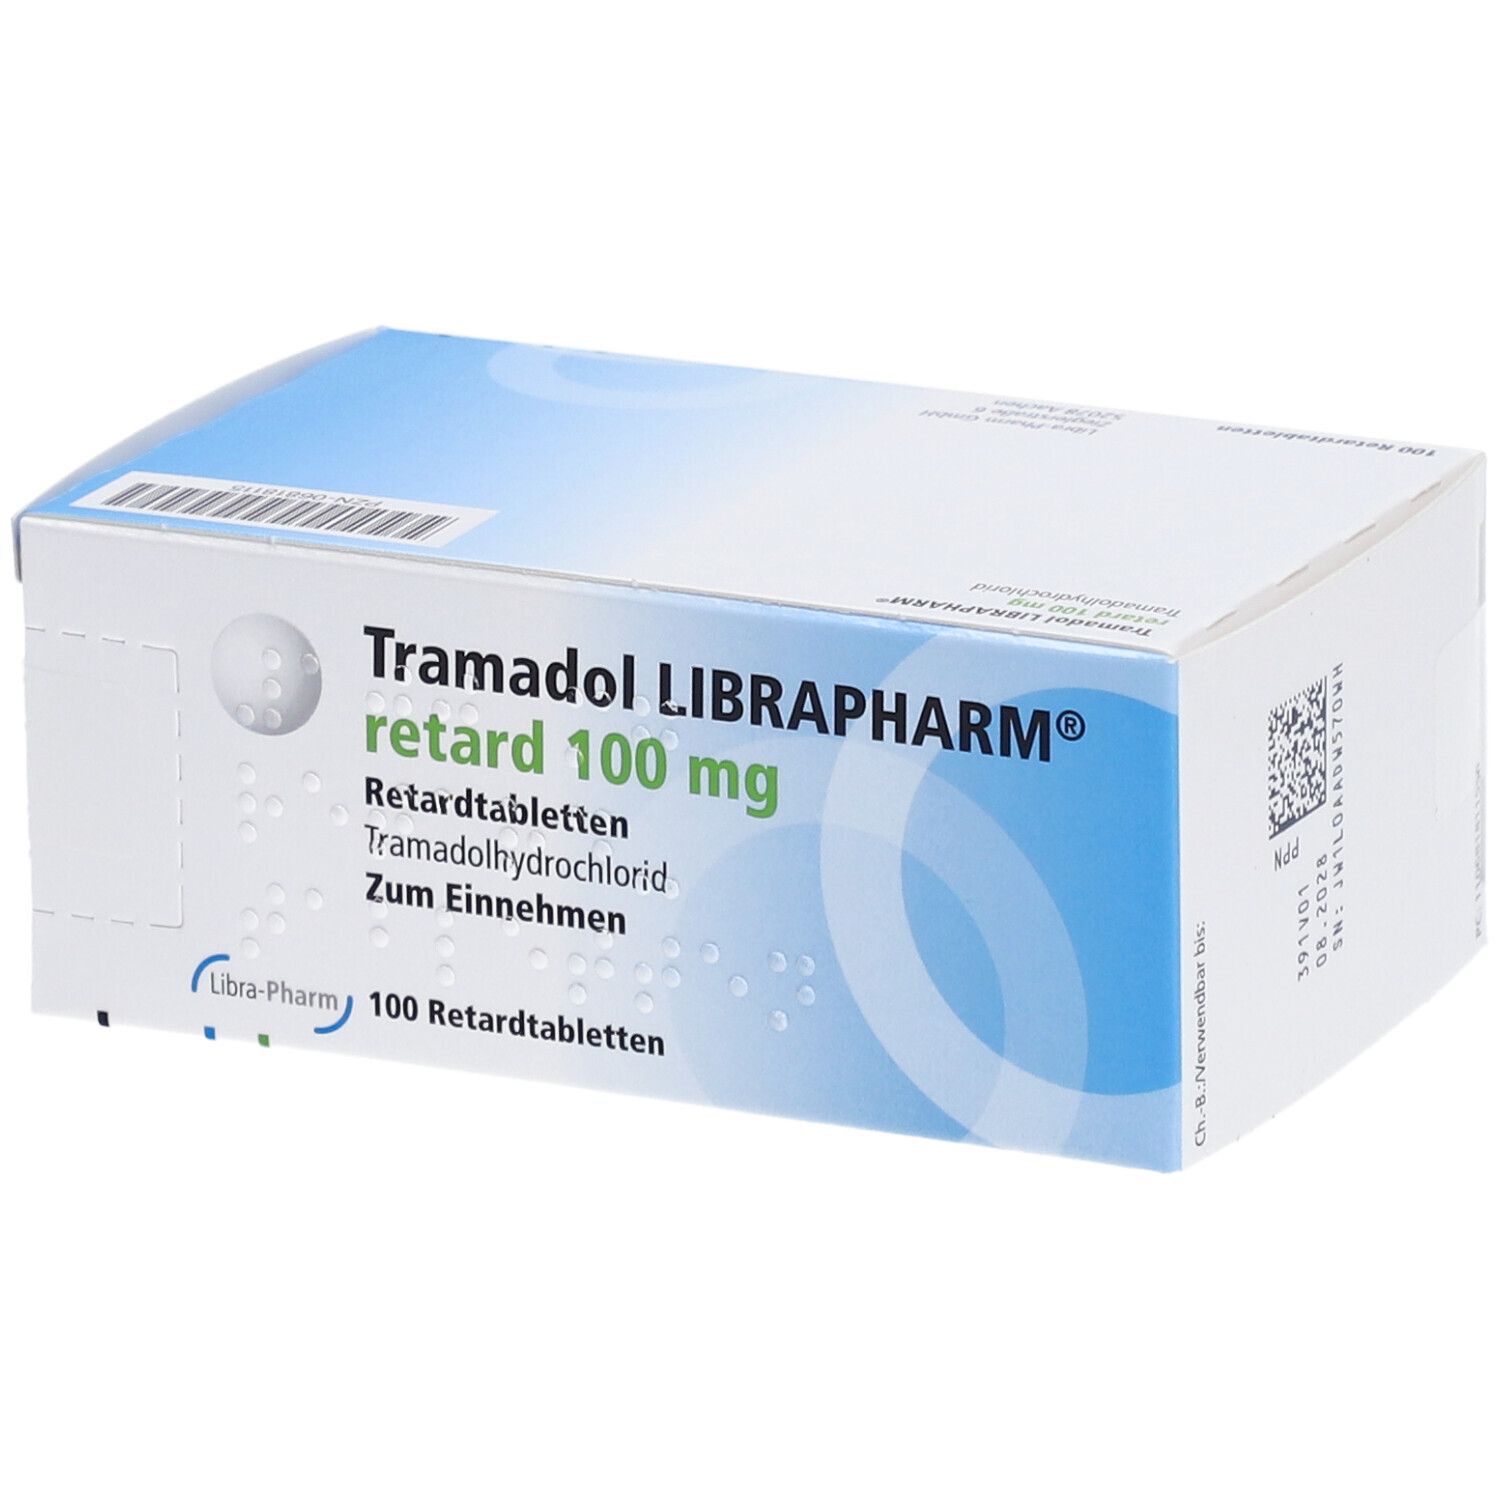 Tramadol LIBRAPHARM® retard 100 mg 100 St mit dem E-Rezept kaufen - SHOP  APOTHEKE